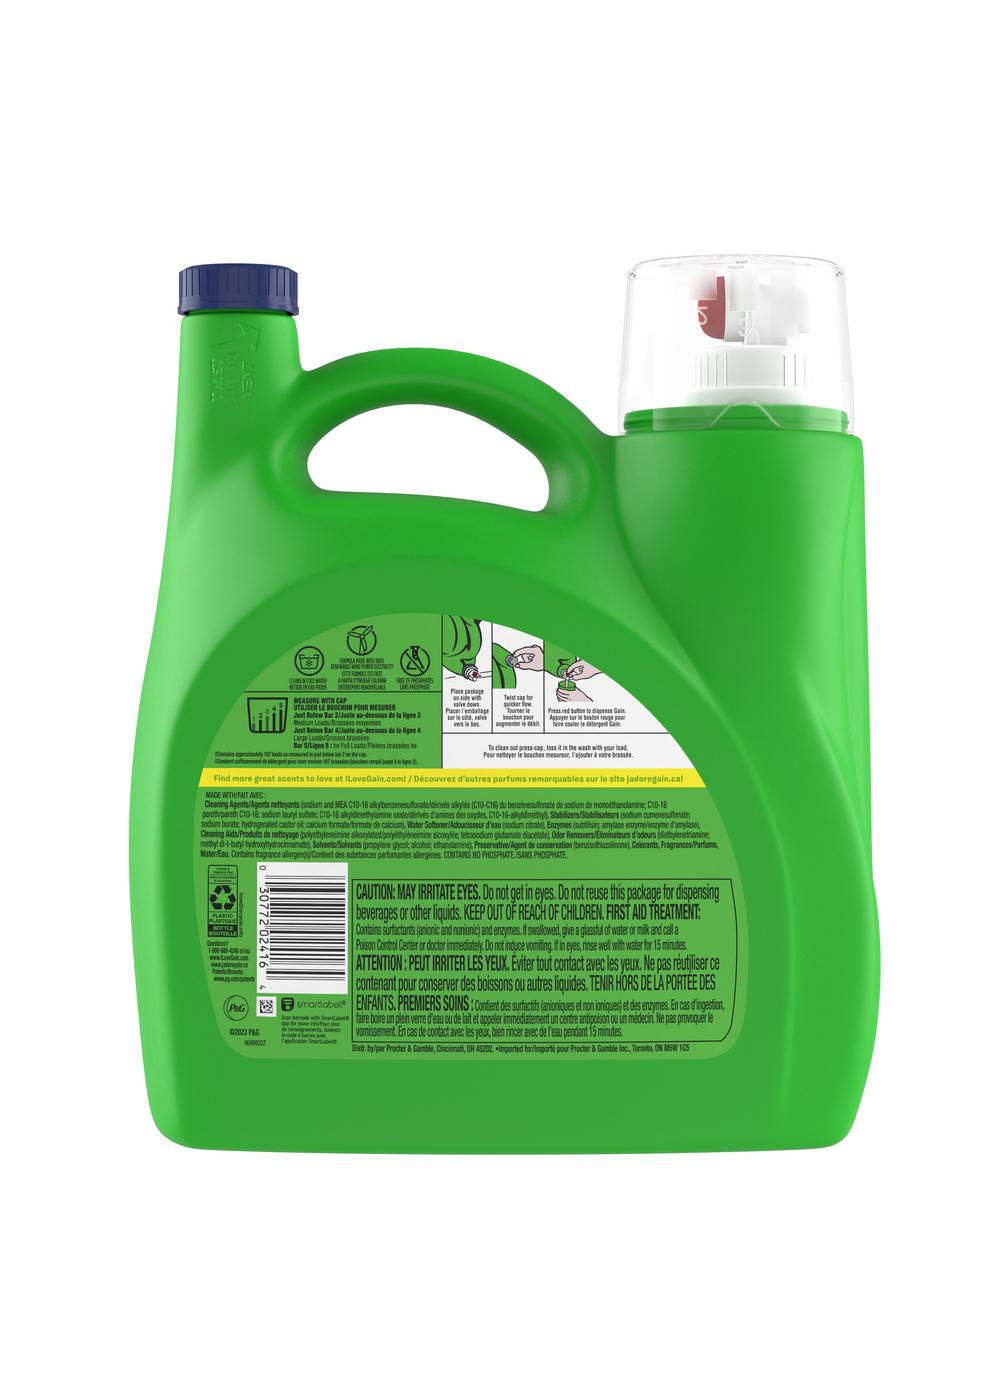 Gain + Odor Defense HE Liquid Laundry Detergent, 107 Loads - Super Fresh Blast; image 2 of 11